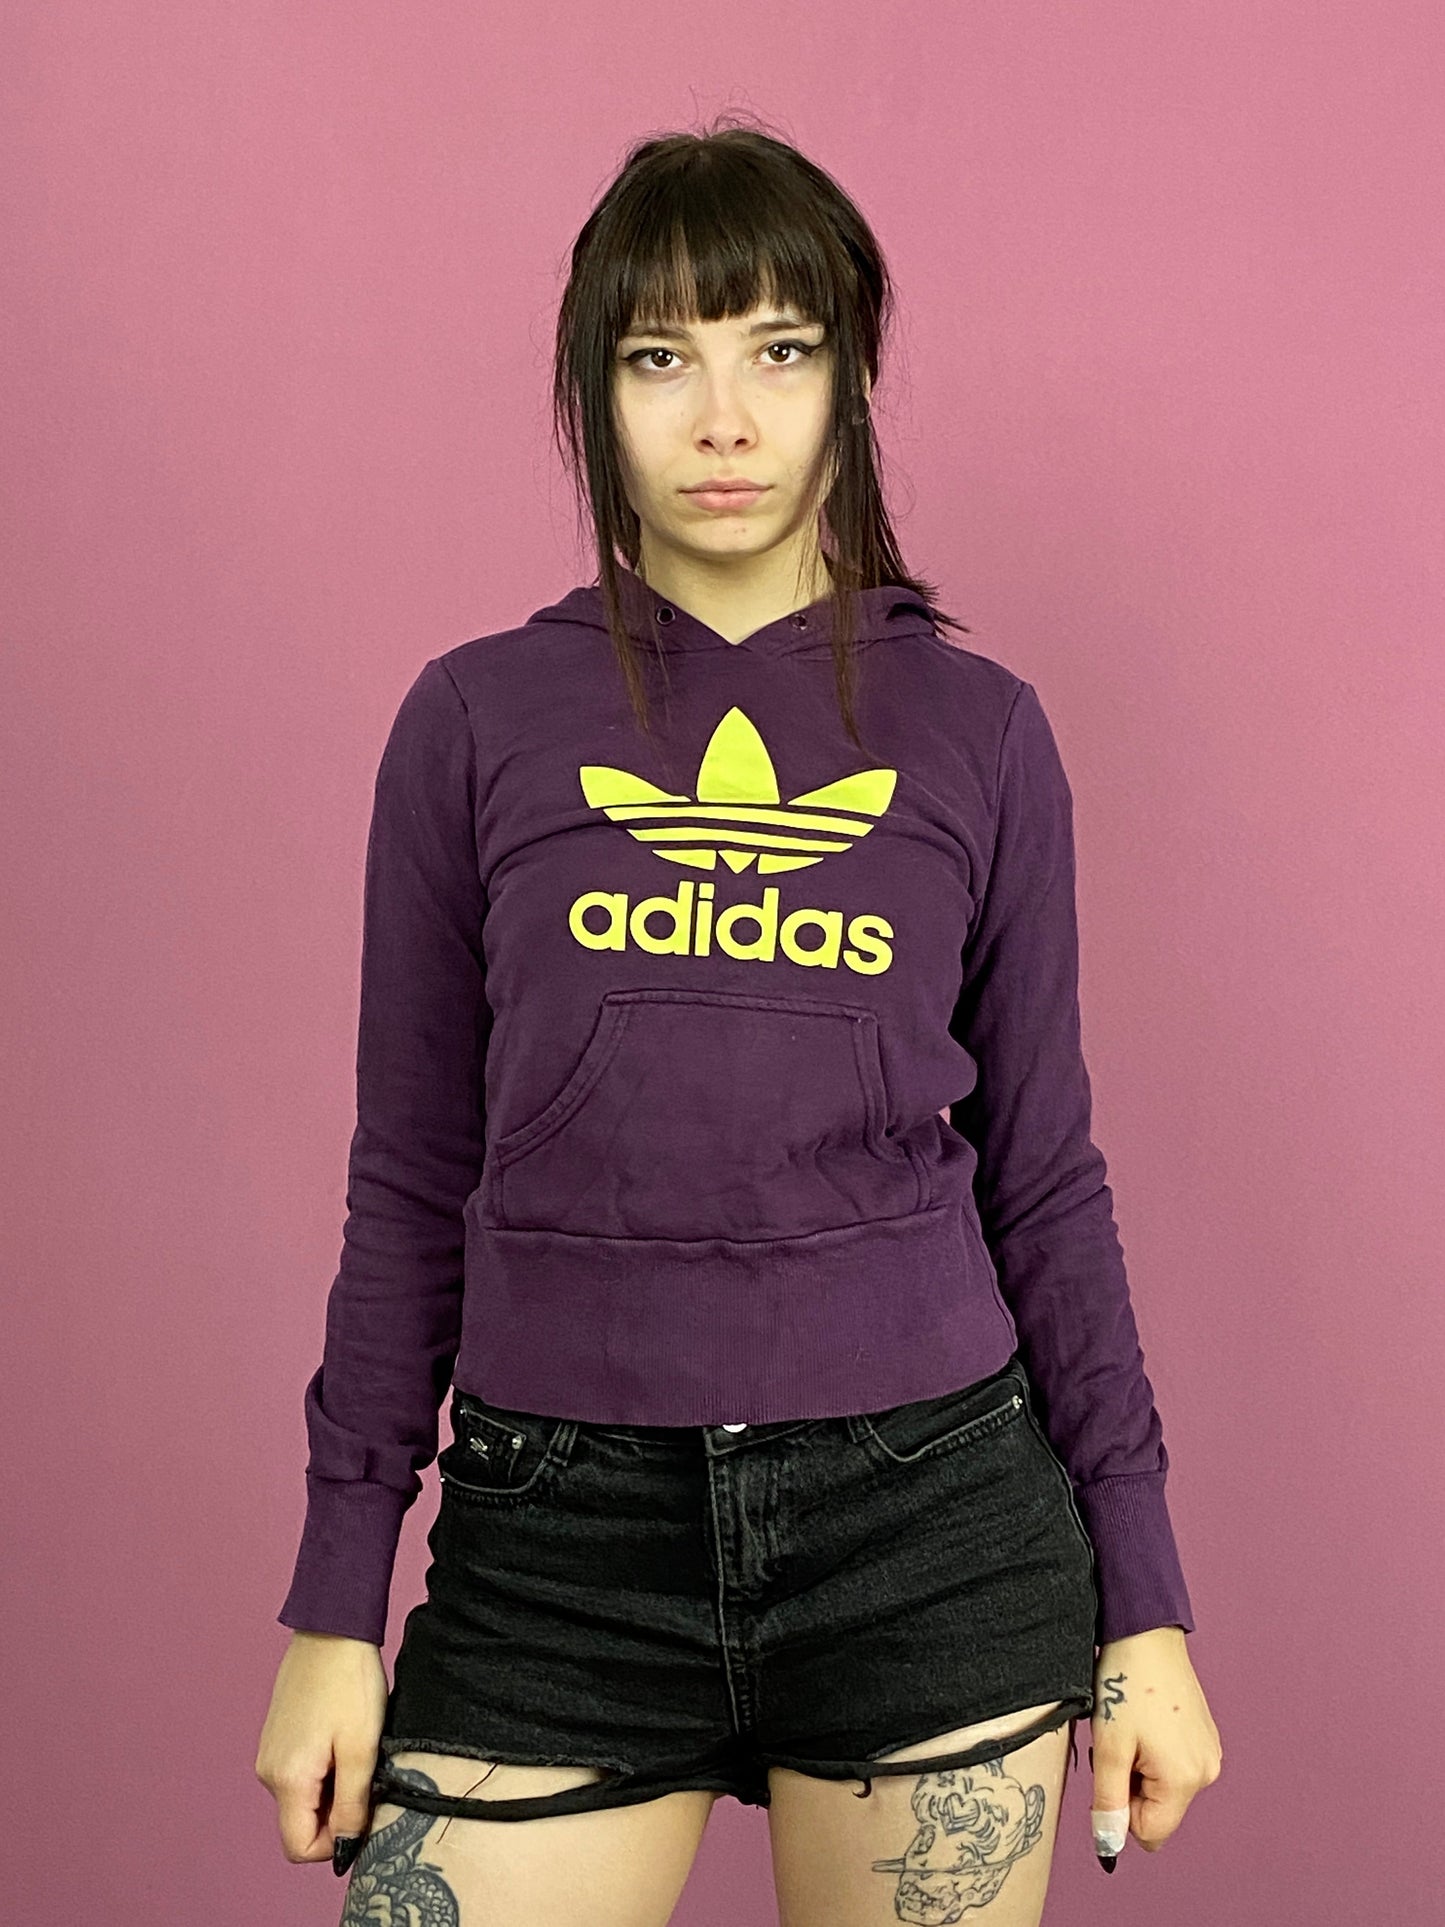 Adidas Vintage Women's Hoodie - Small Purple Cotton Blend